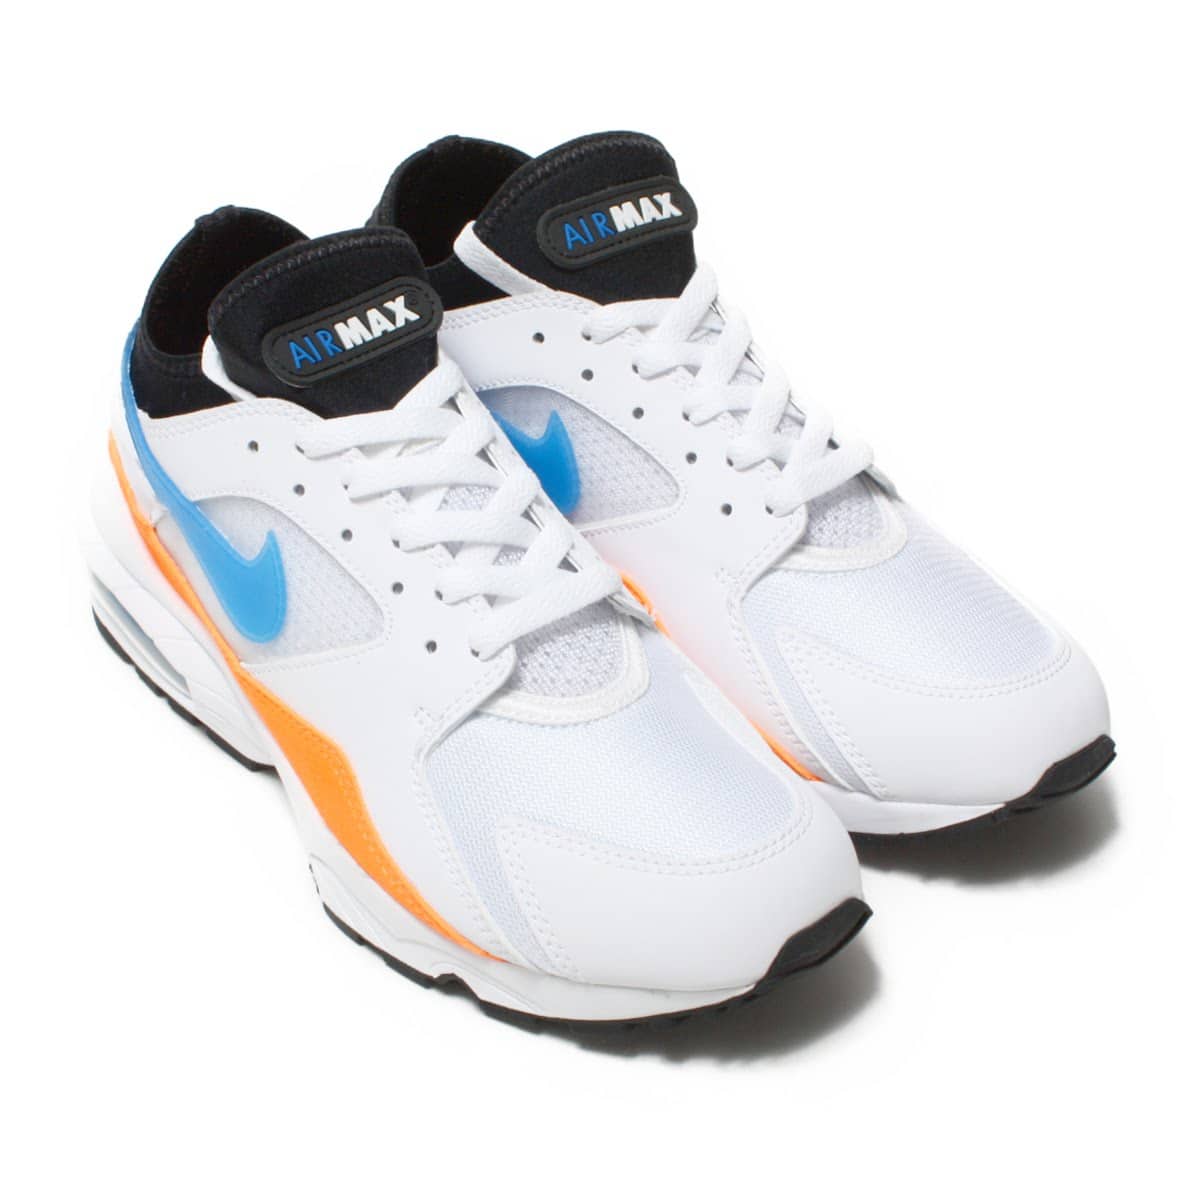 Nike Air Max 93 White Blue Nebula Total Orange Black 18ss I